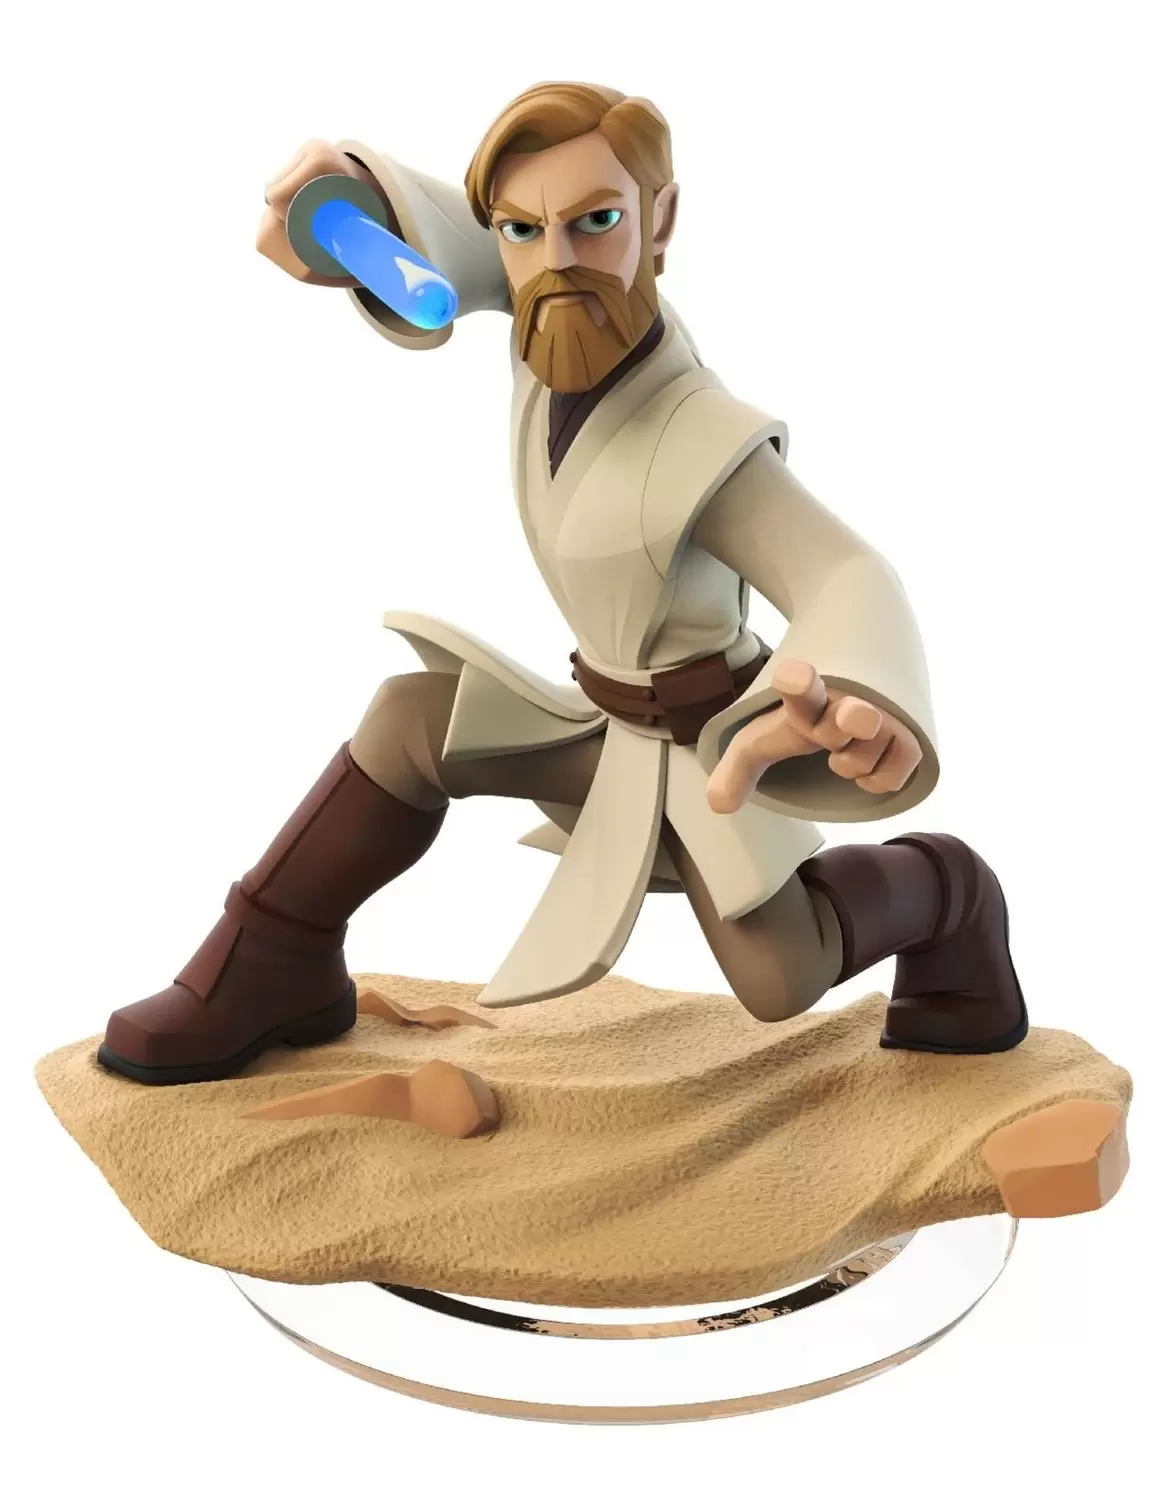 Disney Infinity Action figures - Obi-Wan Kenobi